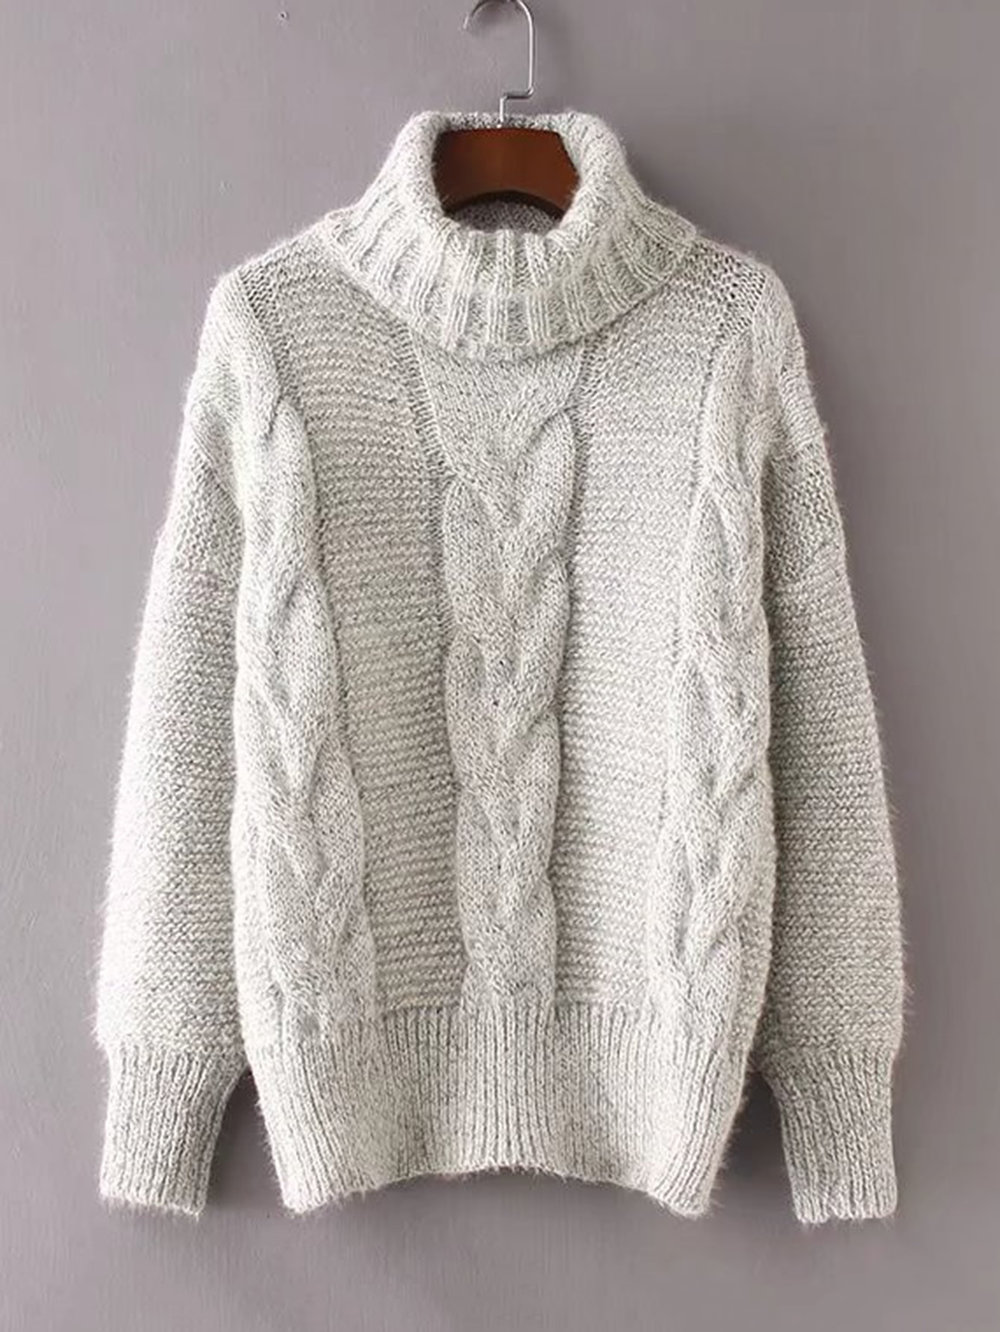 sweater2.jpg